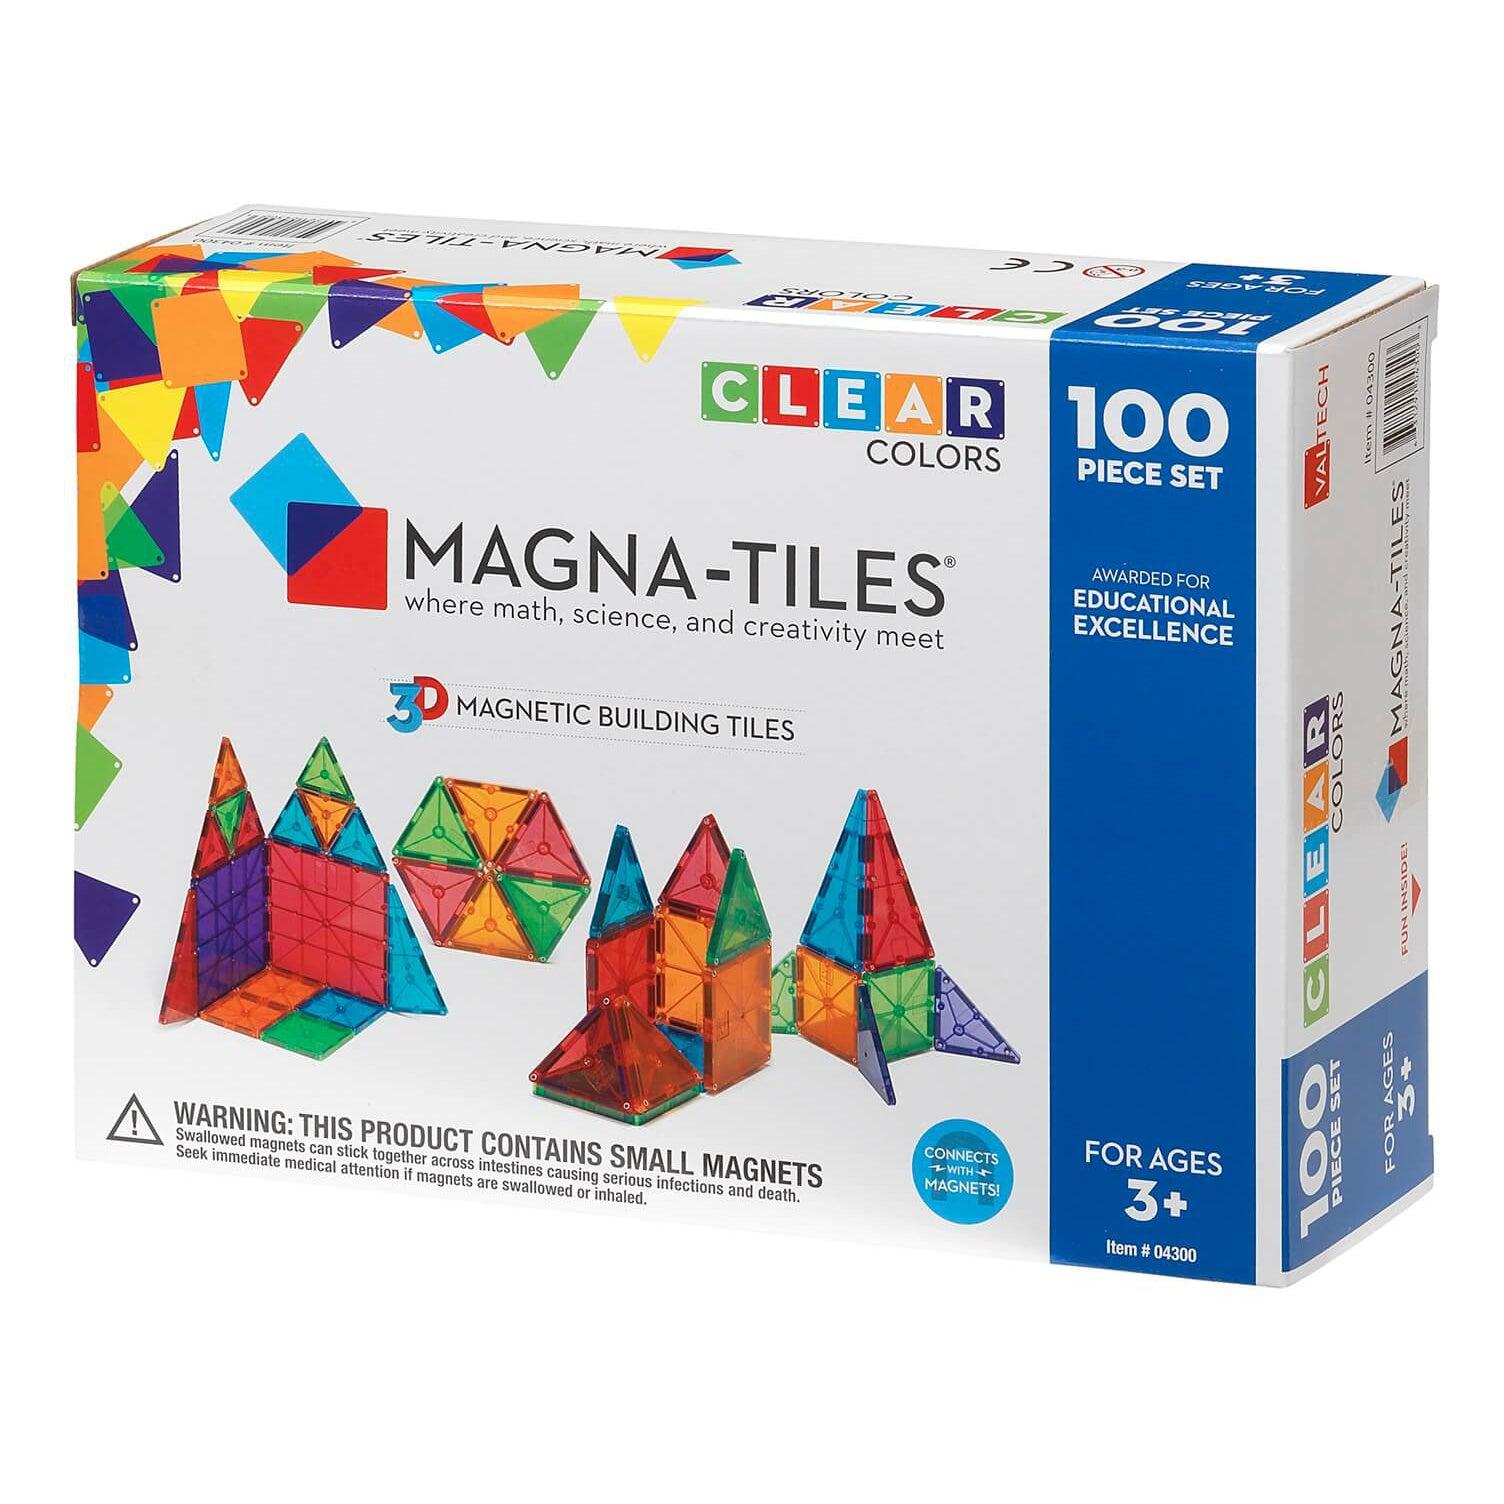 Magna-Tiles-Magna-Tiles 100 Piece Set - Clear Colors-04300-Legacy Toys